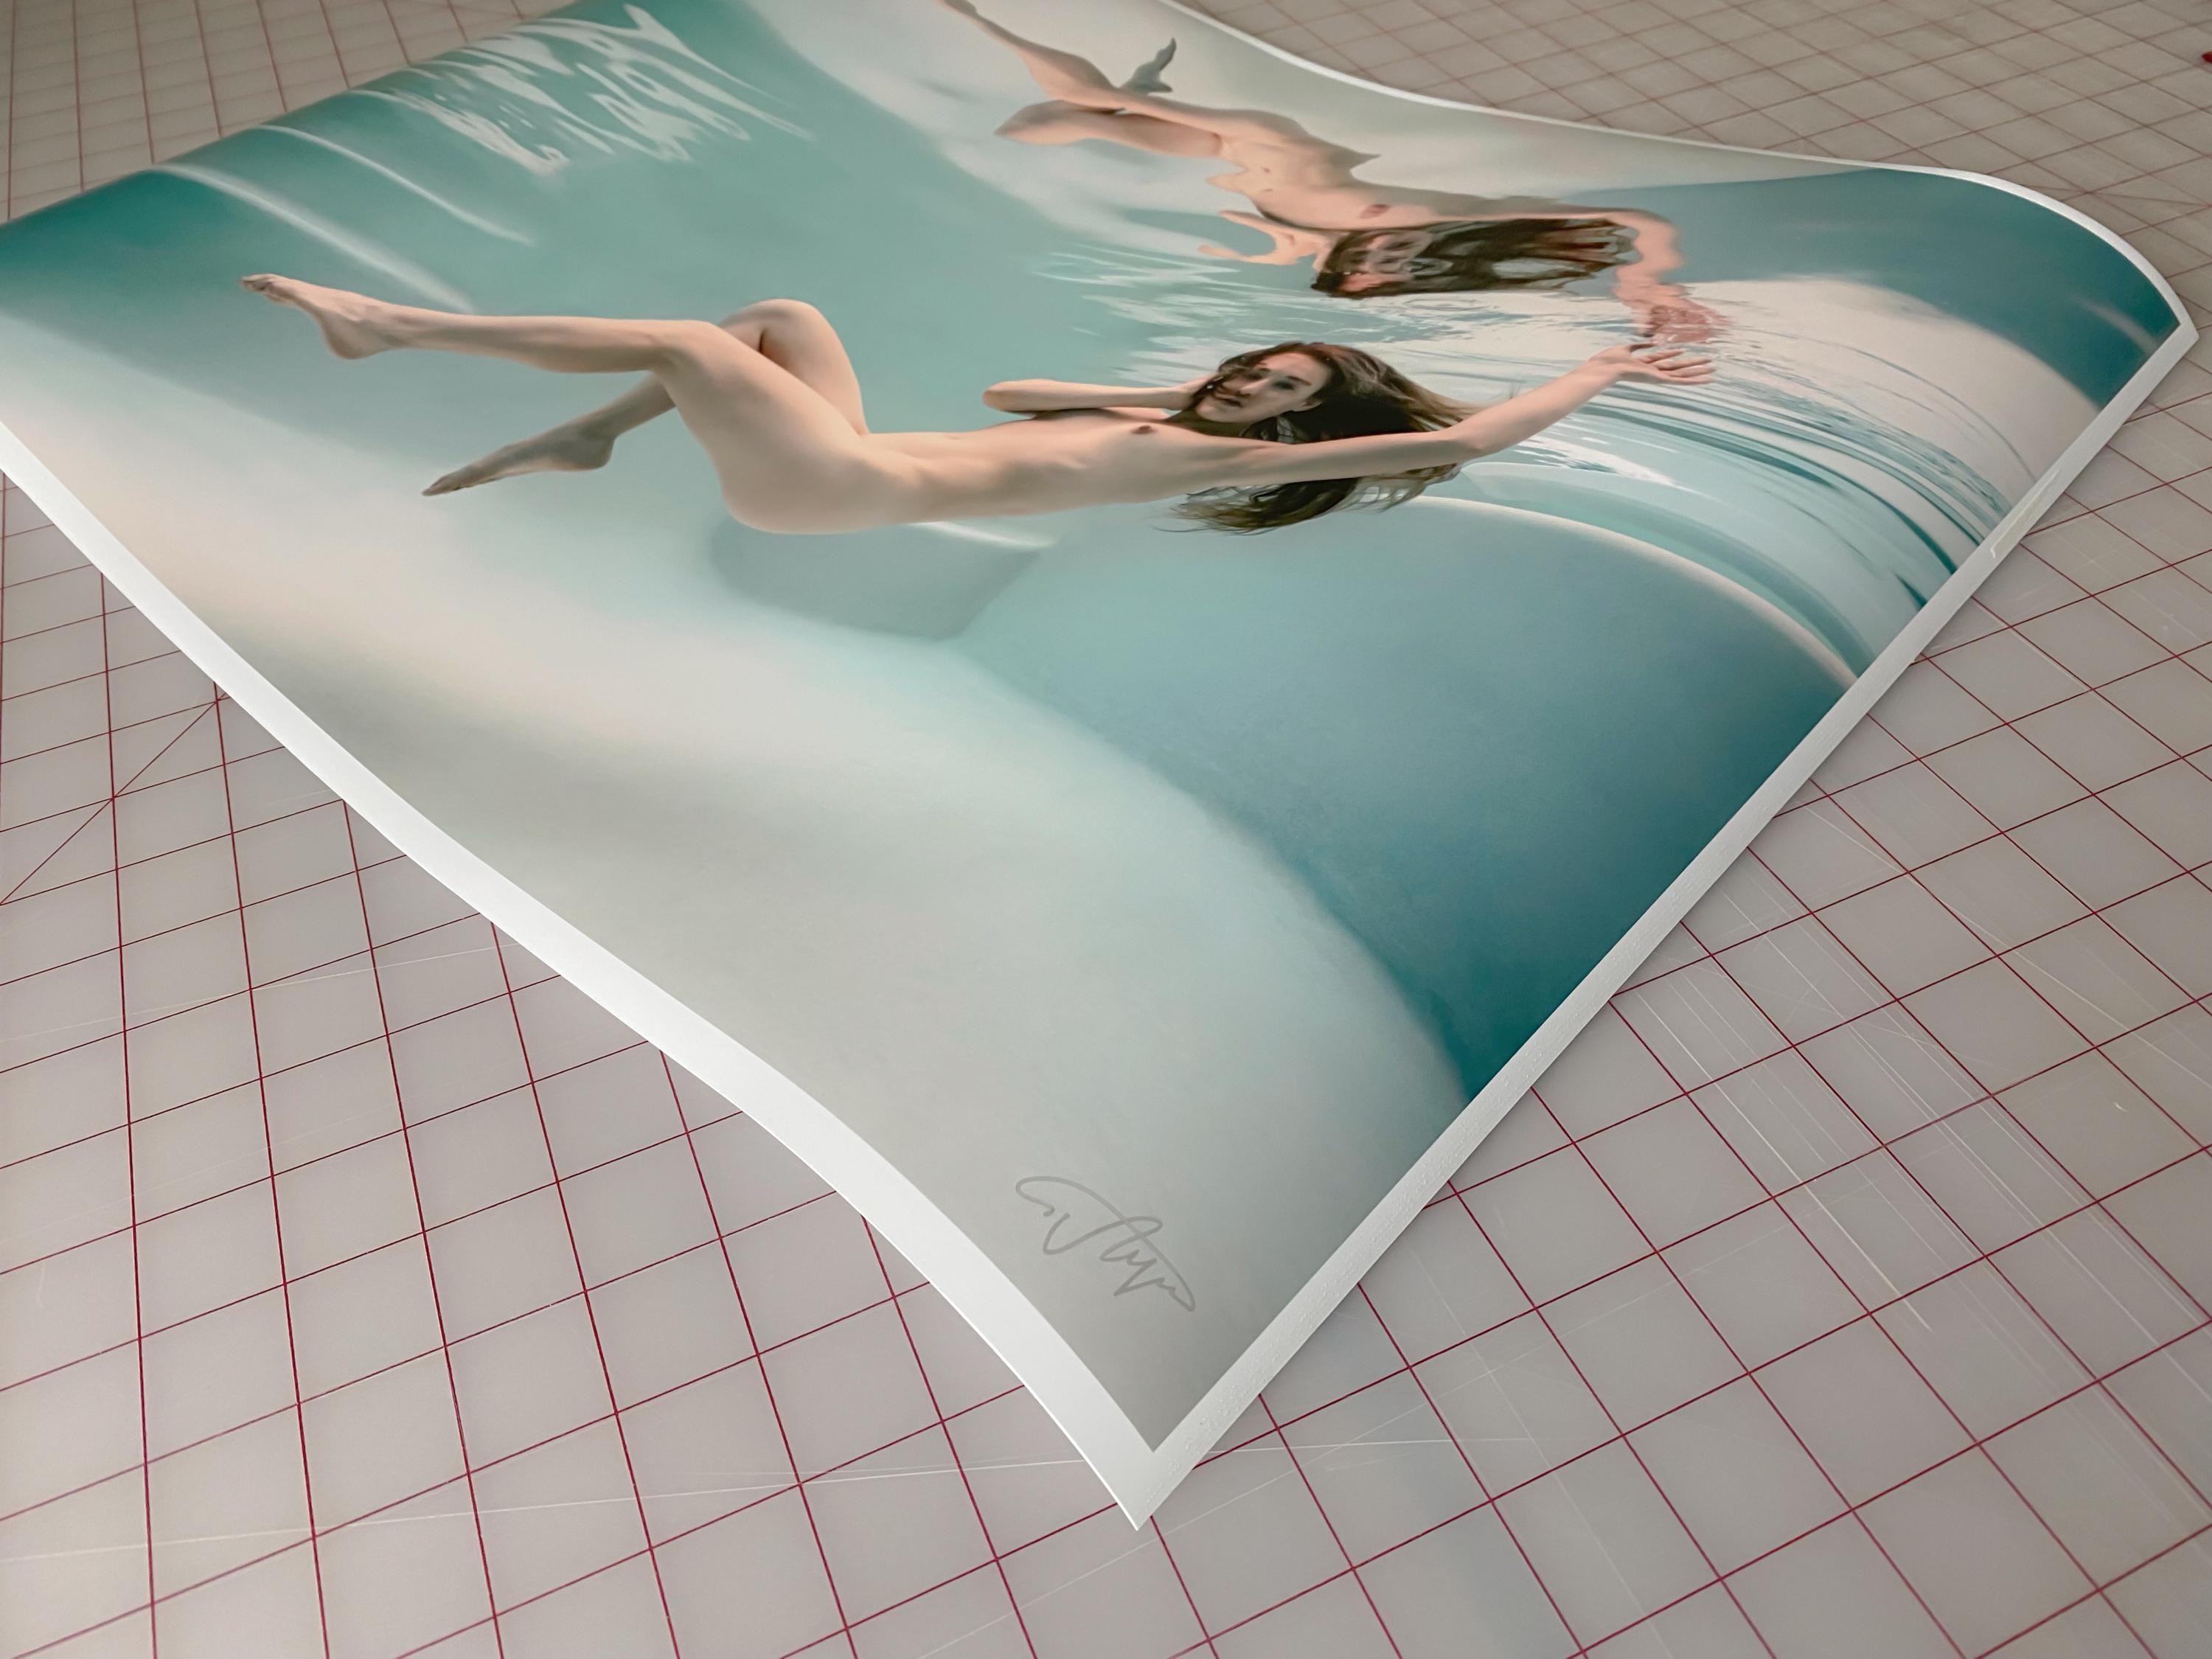 Zero Gravity Lounge III - underwater nude photograph - archival pigment 18x24